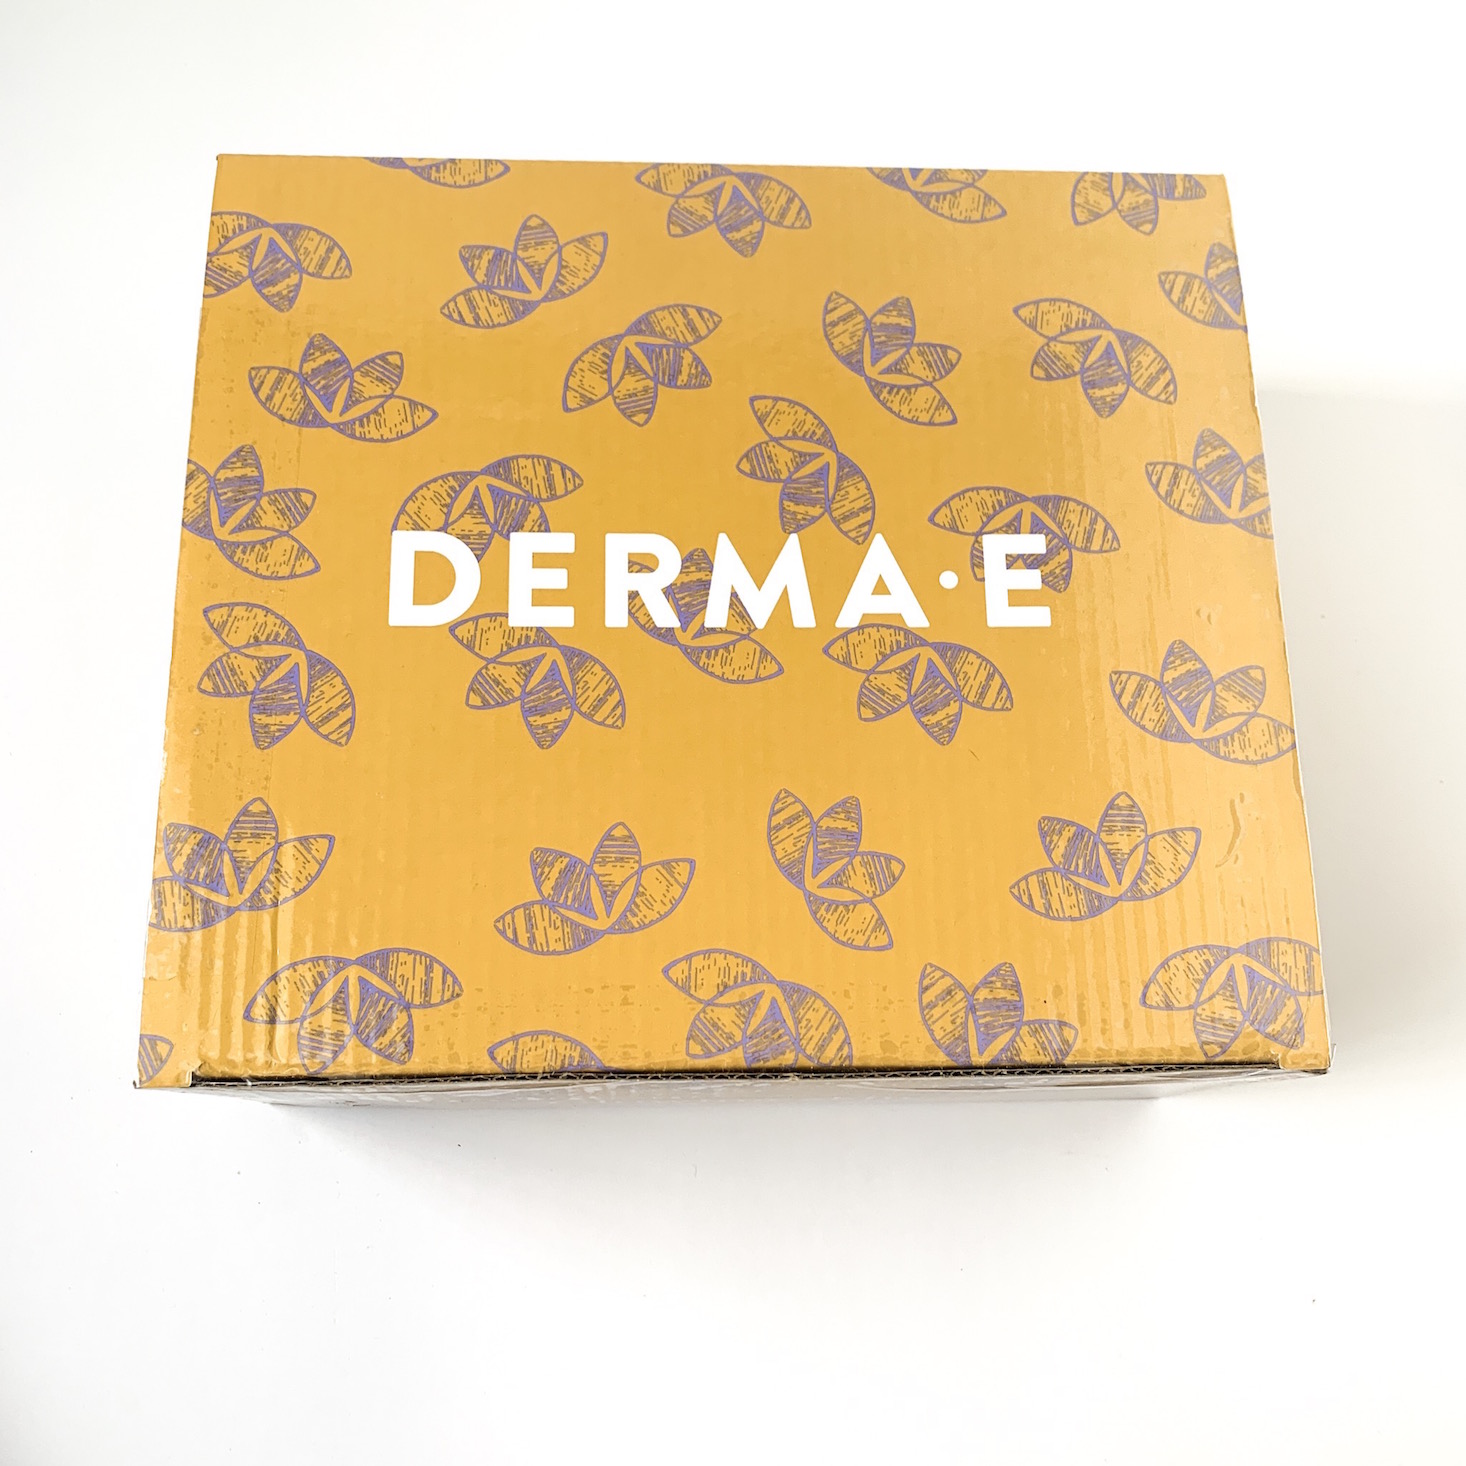 Derma-E Limited Edition Ydelays Ulta Favs Box Review